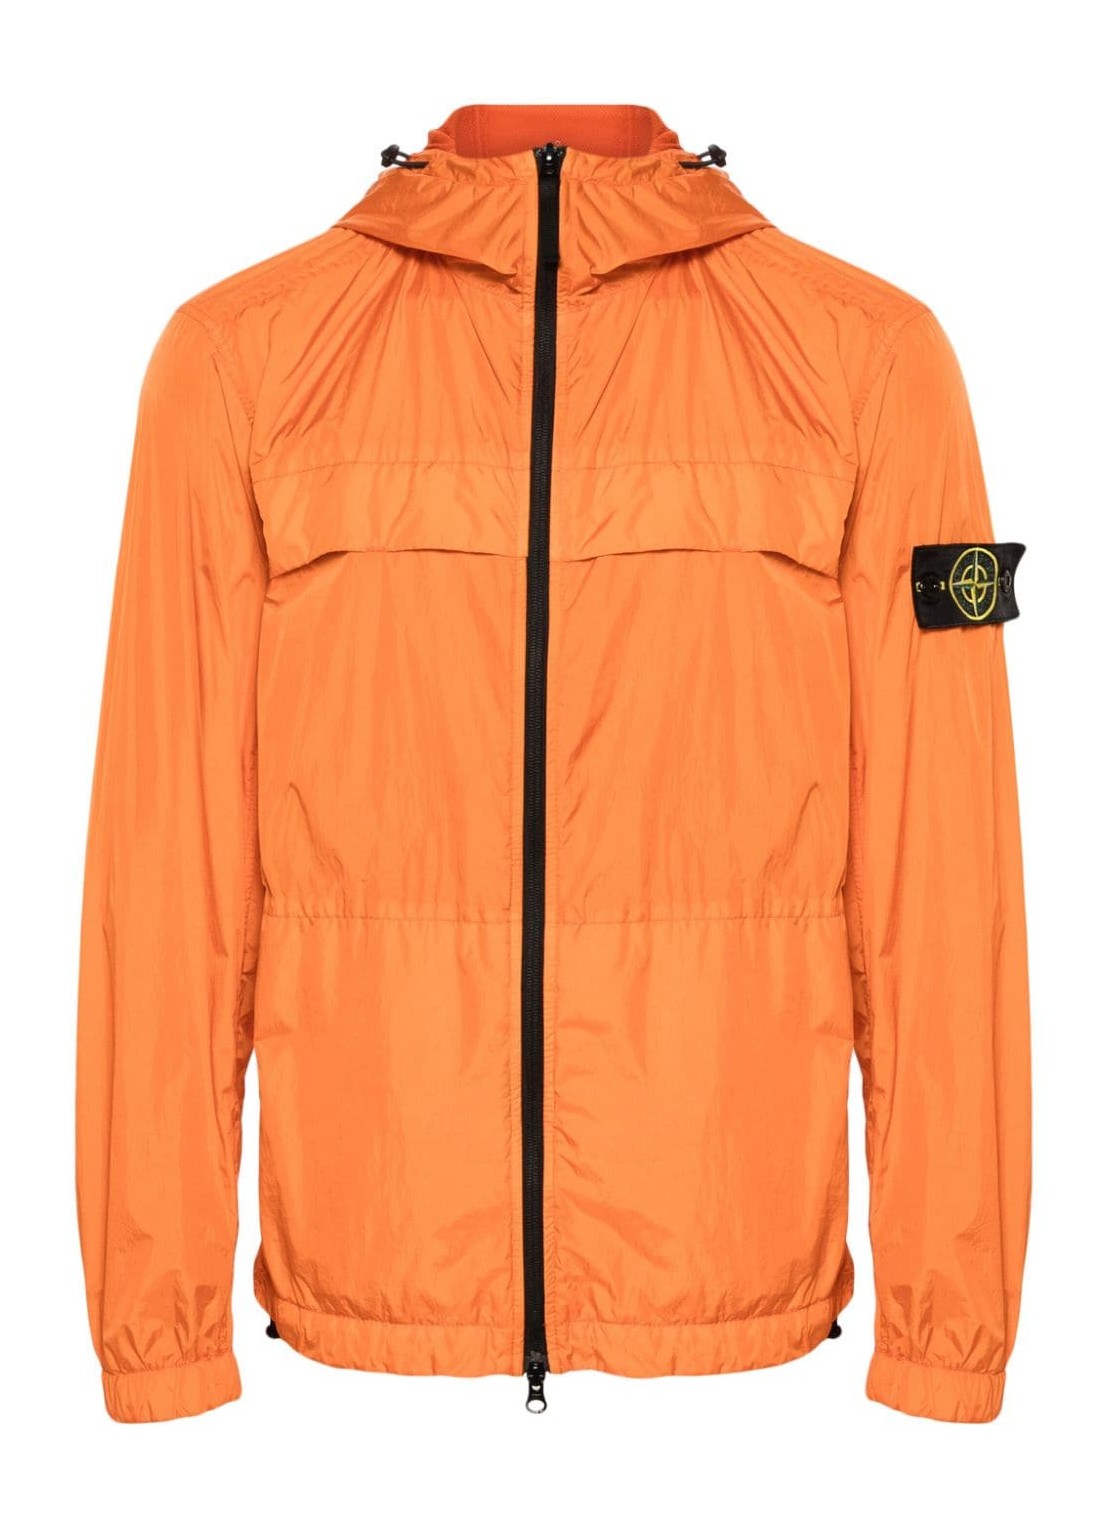 Outerwear stone island outerwear man jacket 801540922 v0032 talla XL
 